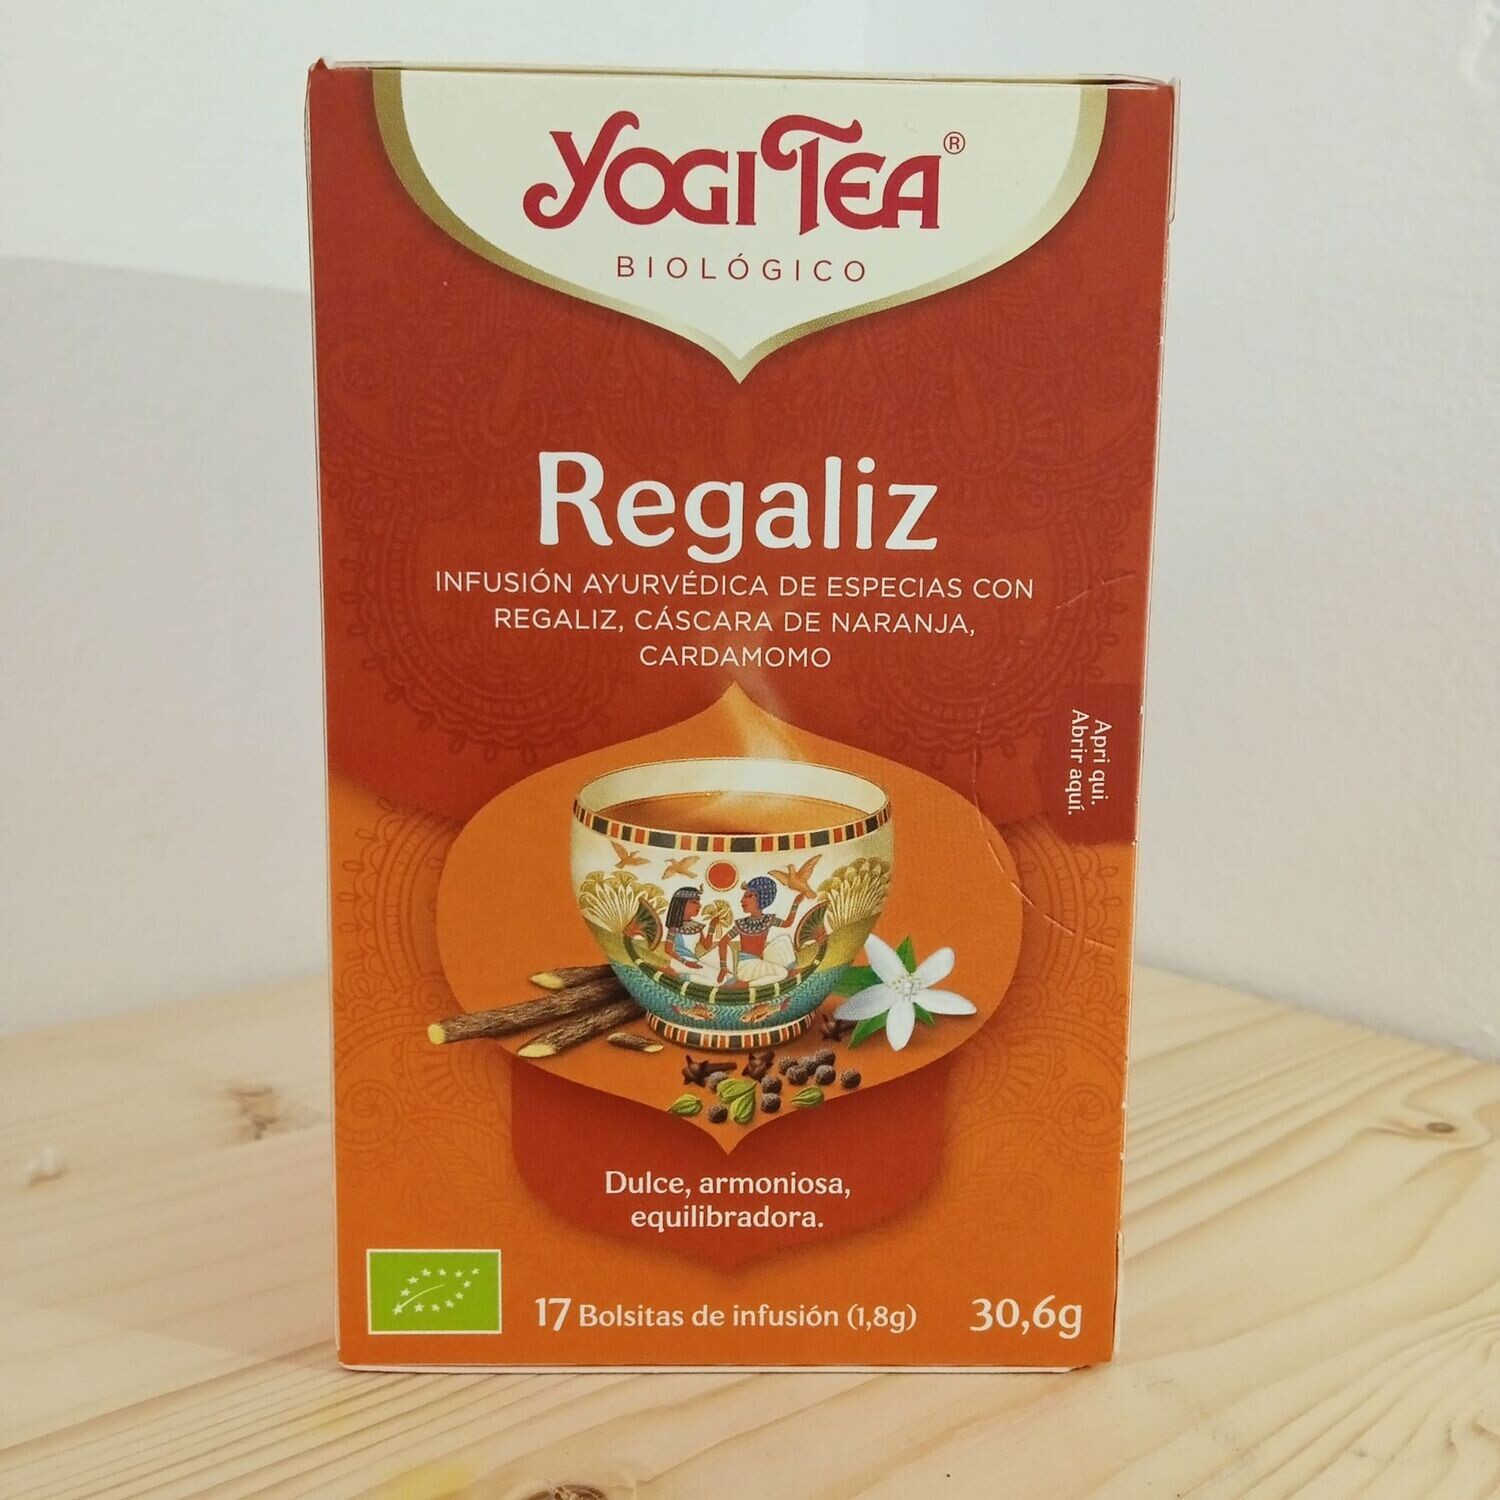 Yogi Tea "Regaliz"